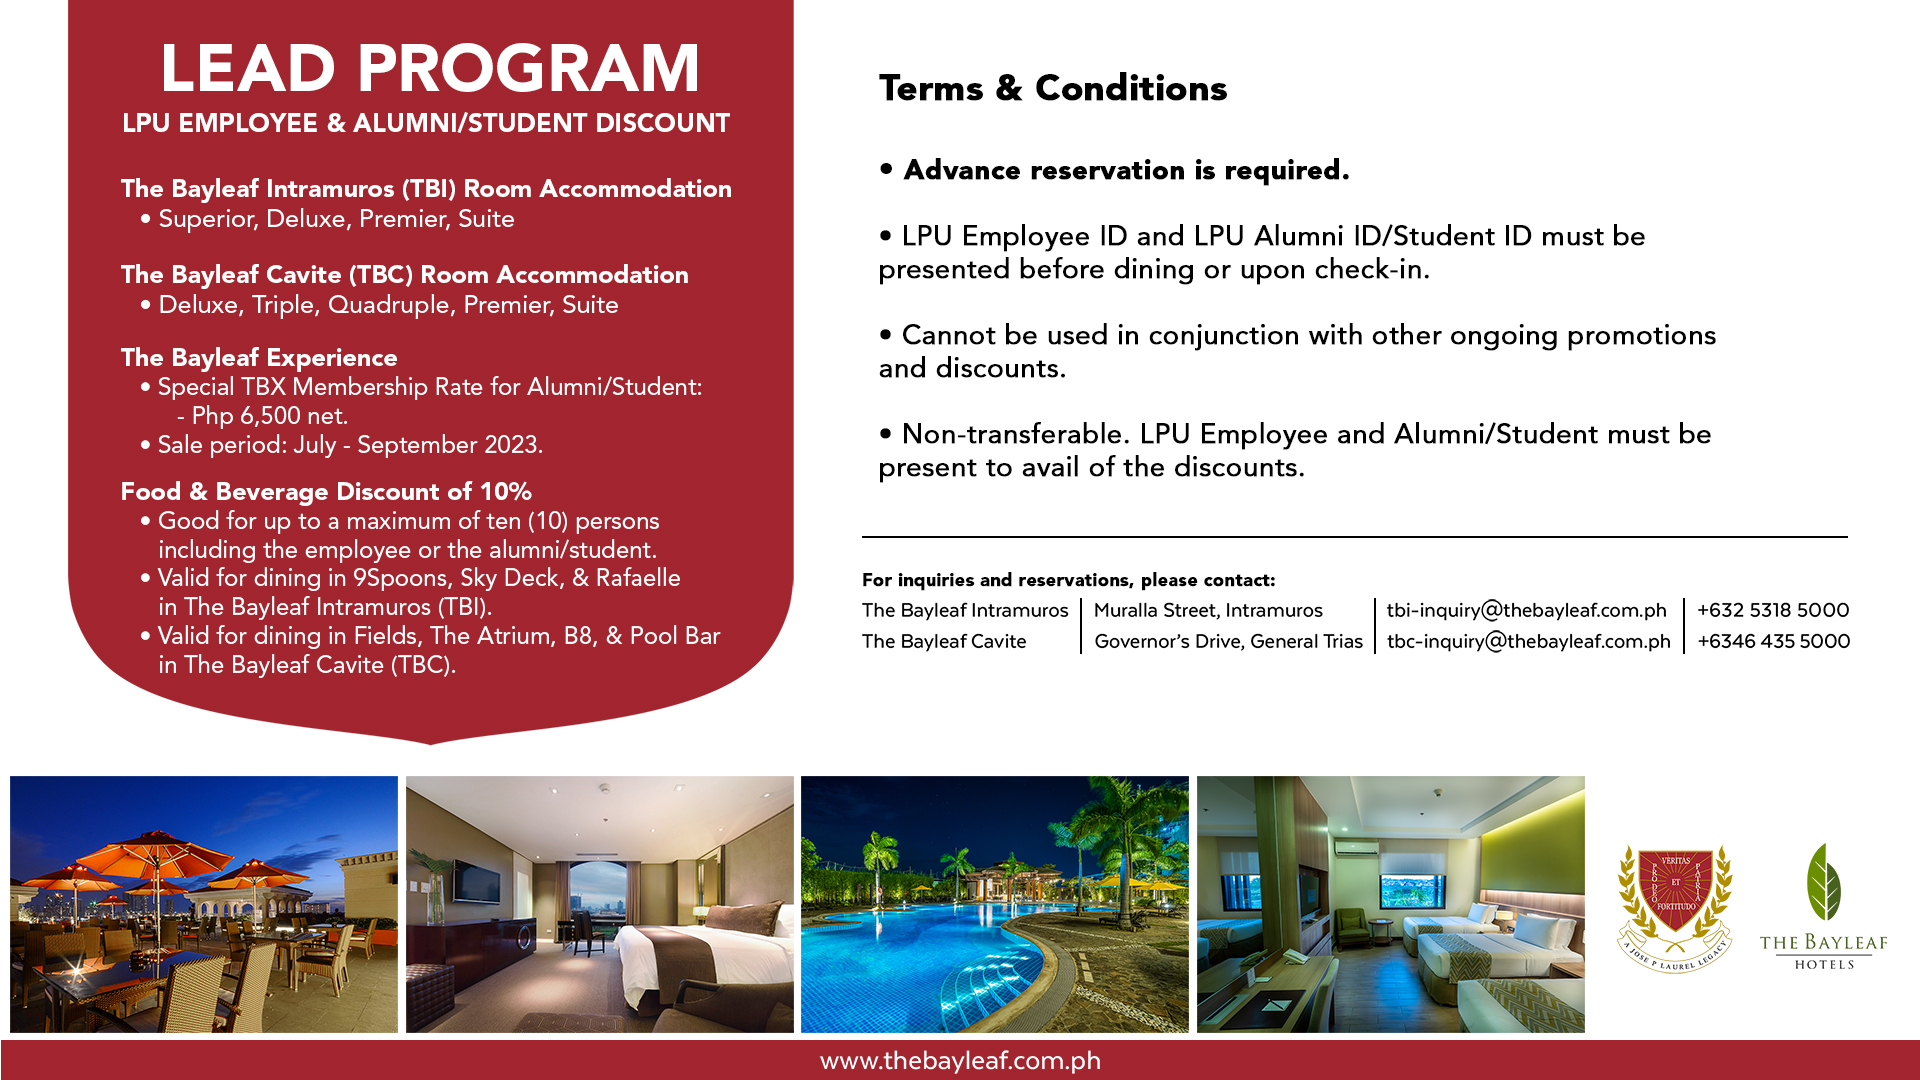 The Bayleaf Hotels LPU Employee and Alumni/Student Benefits